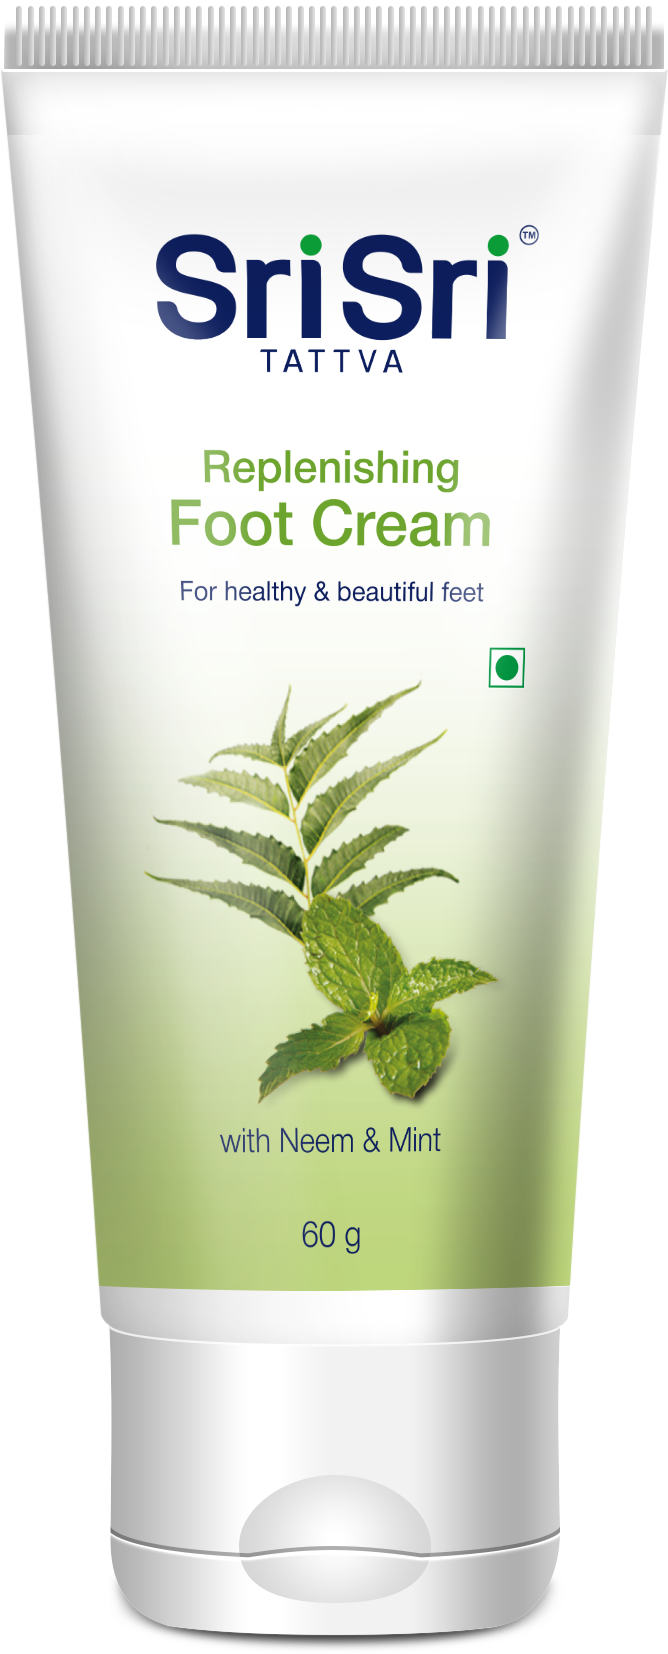 Buy Sri Sri Tattva Replenishing Foot Cream at Best Price Online